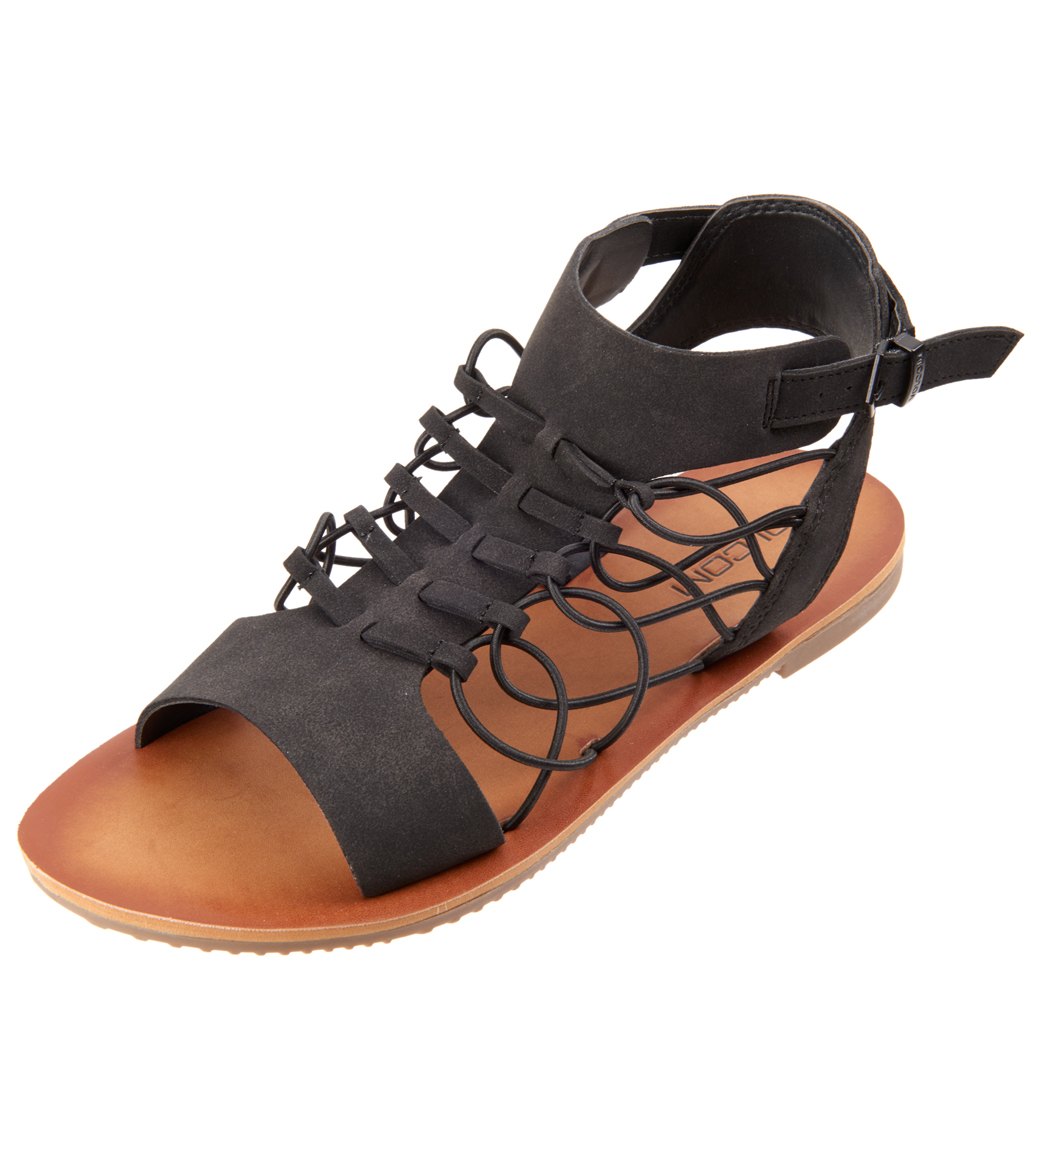 Volcom Women's Cages Bird Sandals - Black 6 Leather/Polyurethane/Rubber - Swimoutlet.com